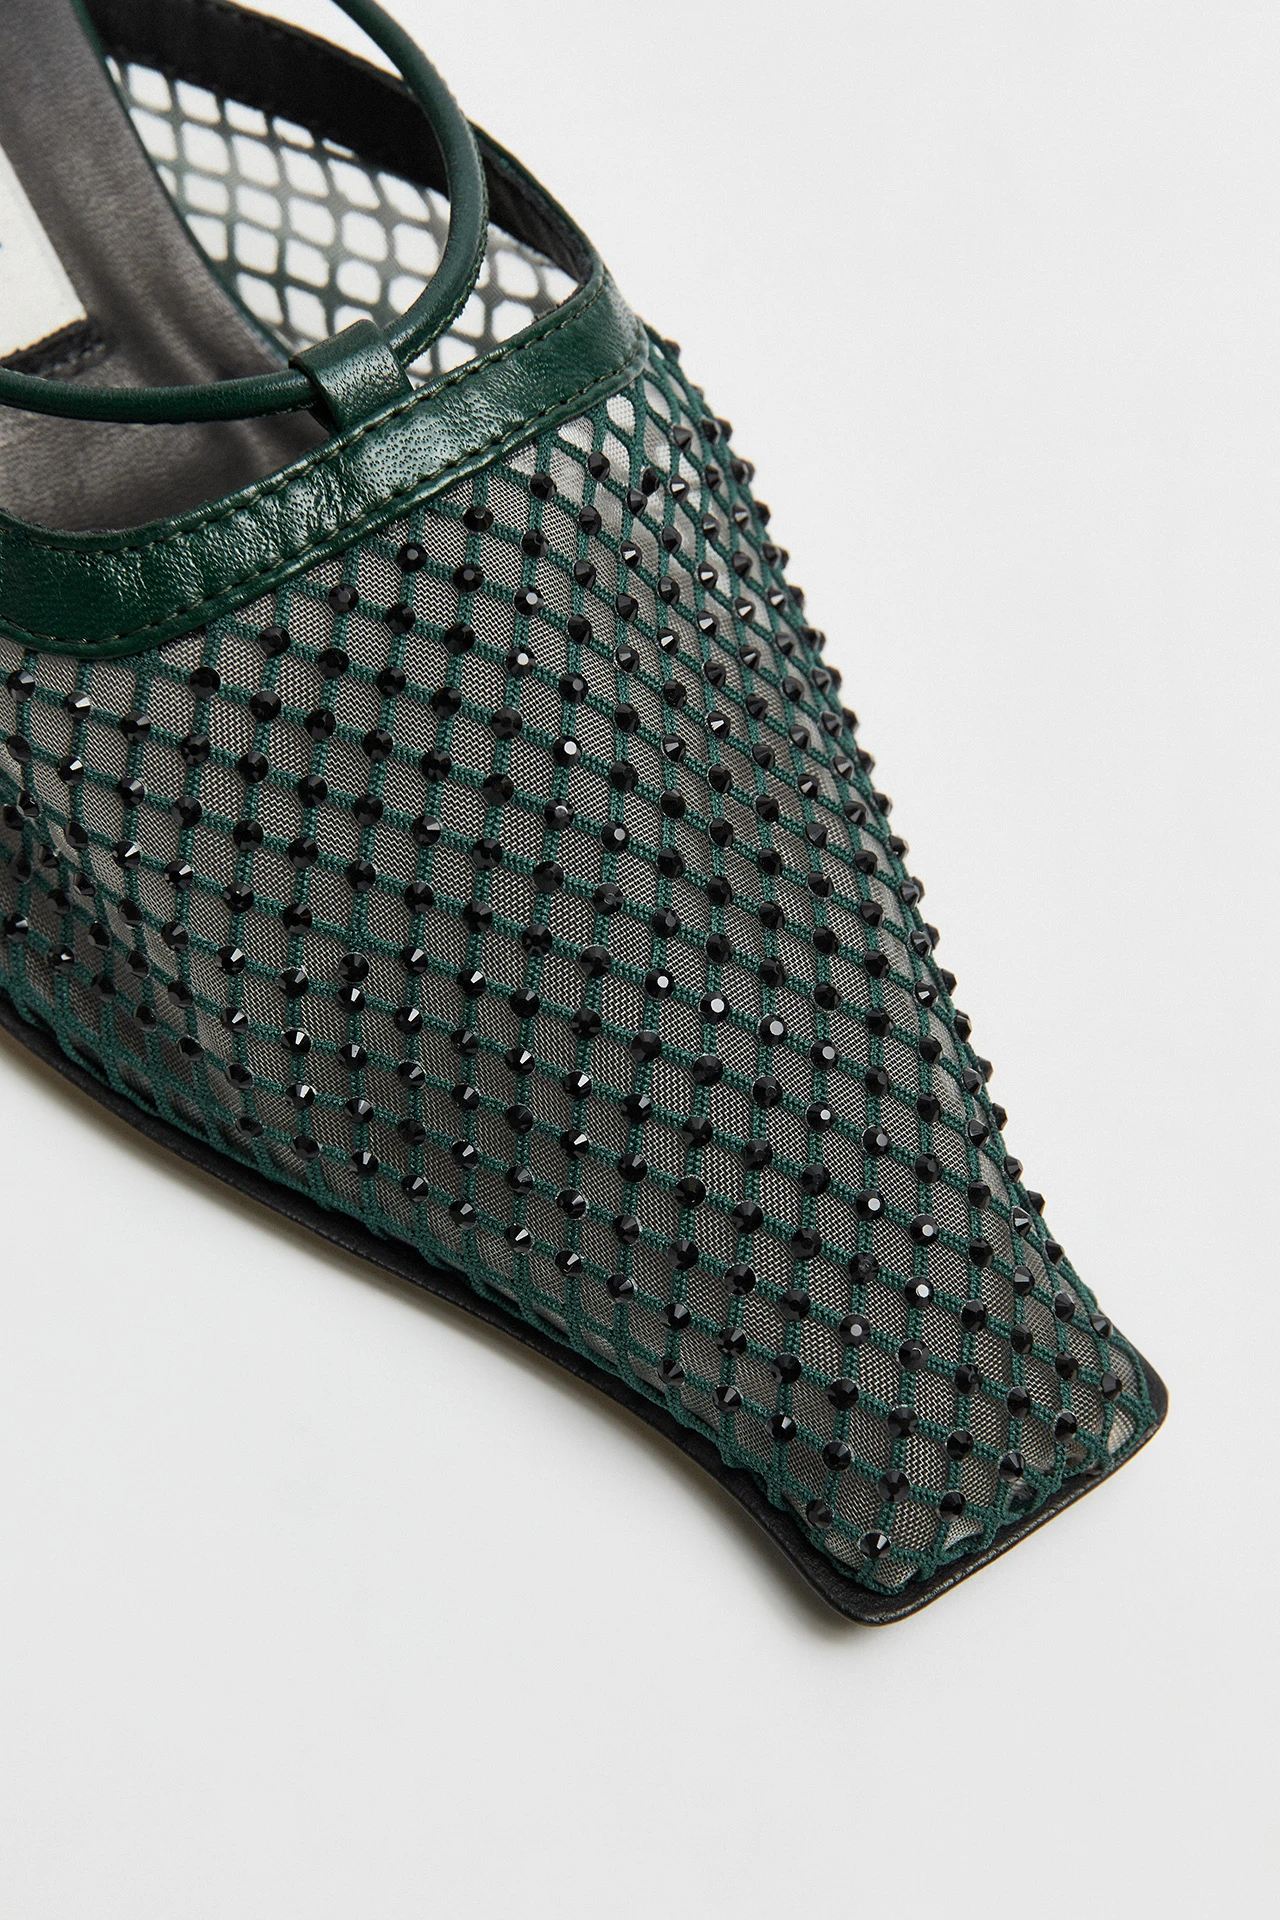 Miista-andes-green-mesh-mule-sandals-04